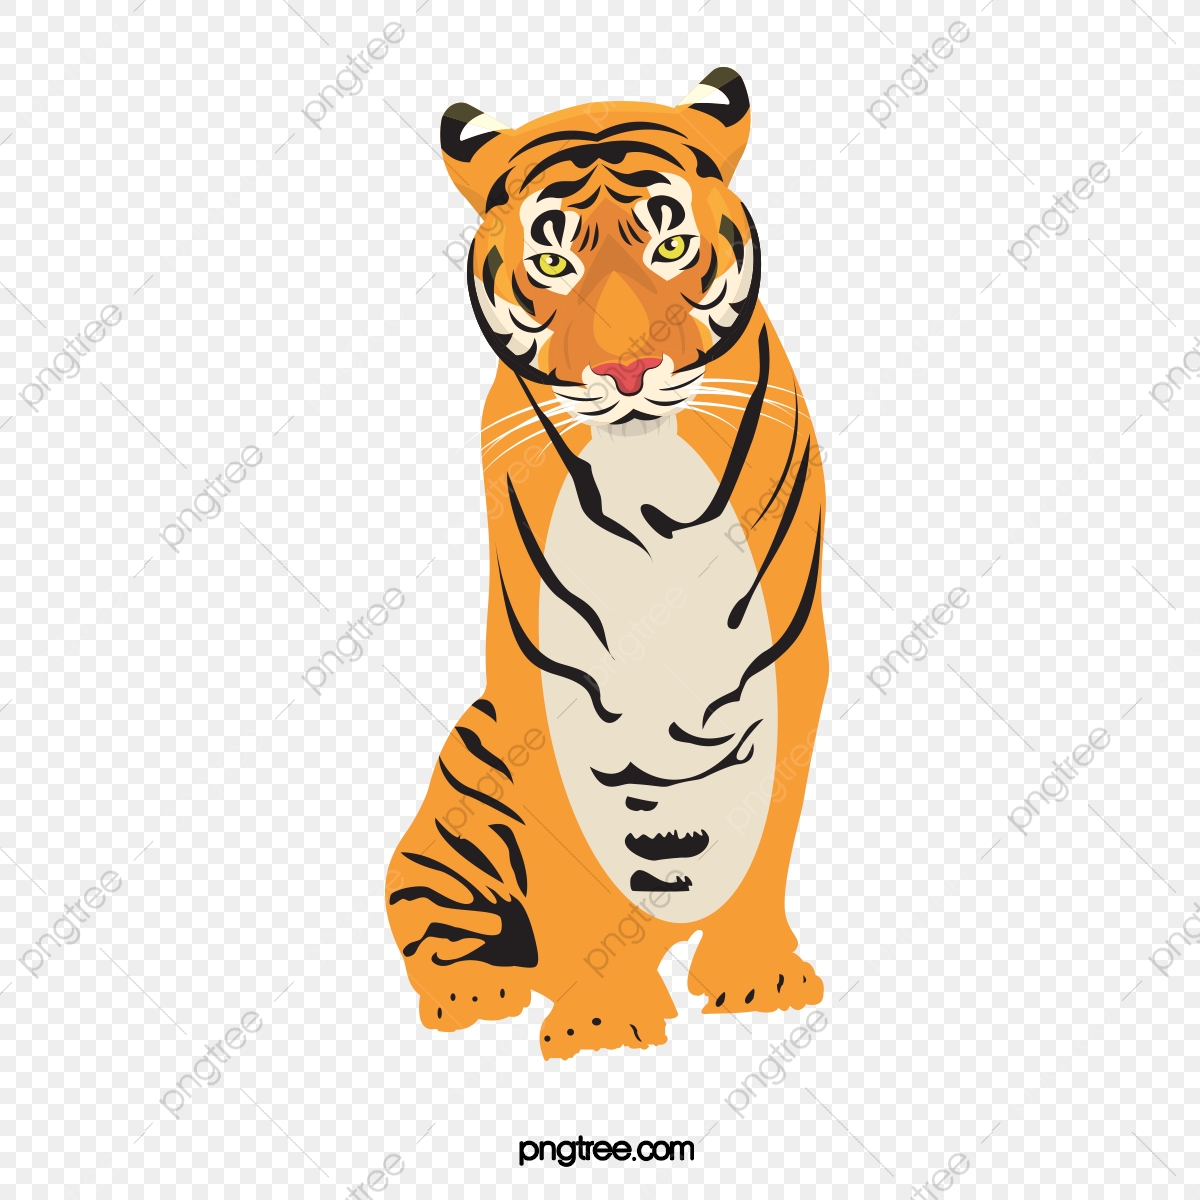 Tiger, Tiger Clipart, Animal PNG Transparent Clipart Image.